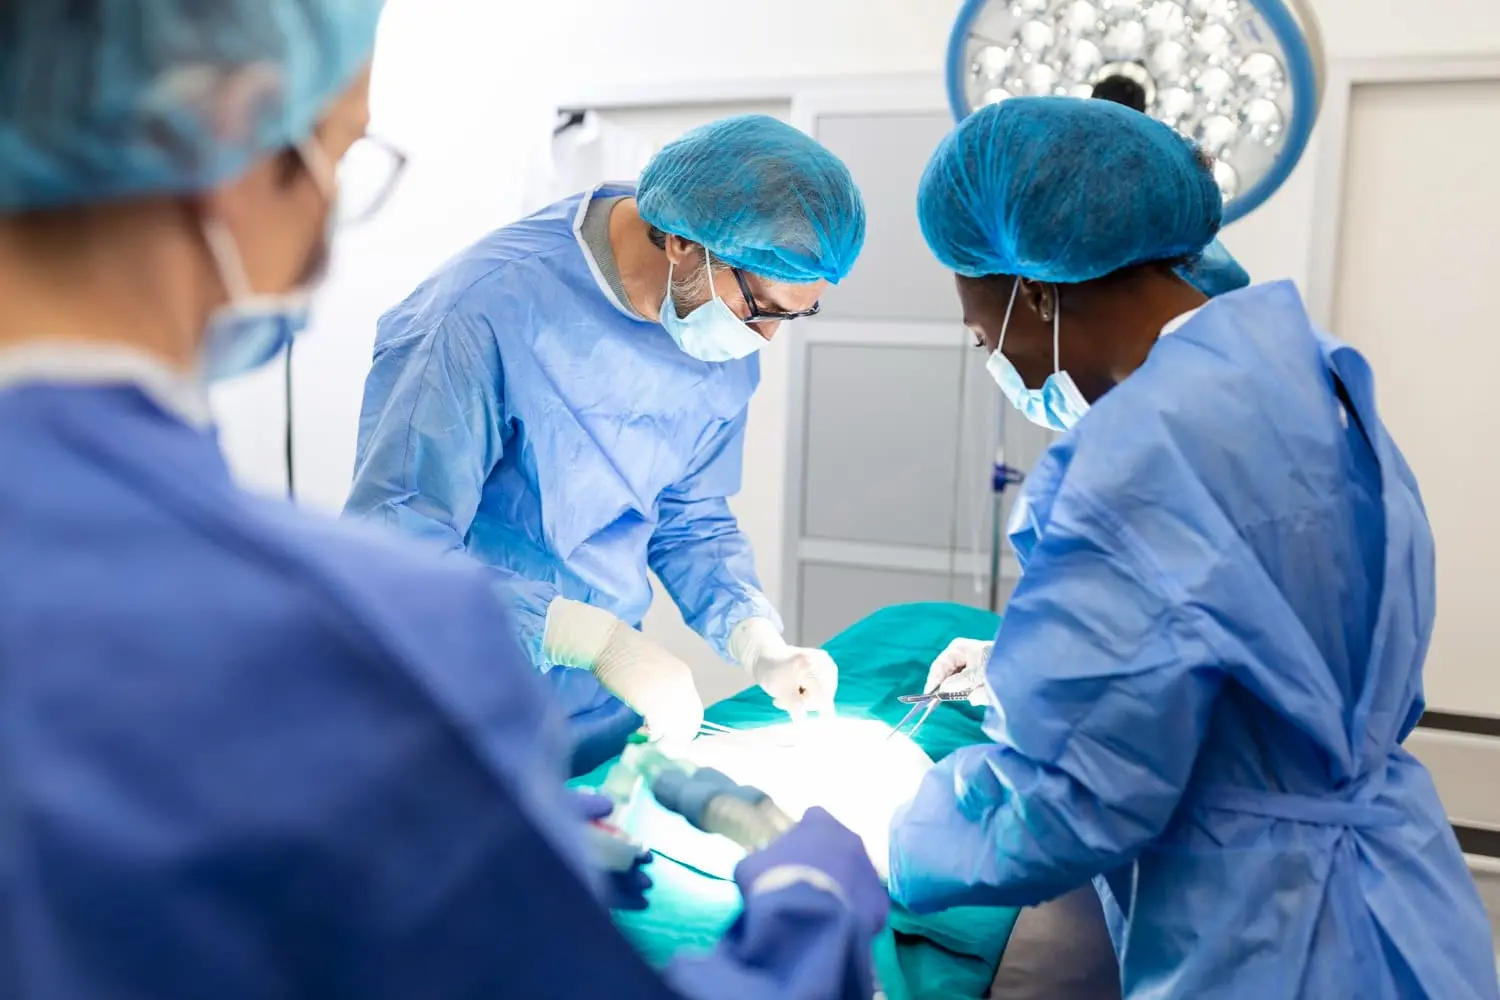 surgeon-team-uniform-performs-operation-patient